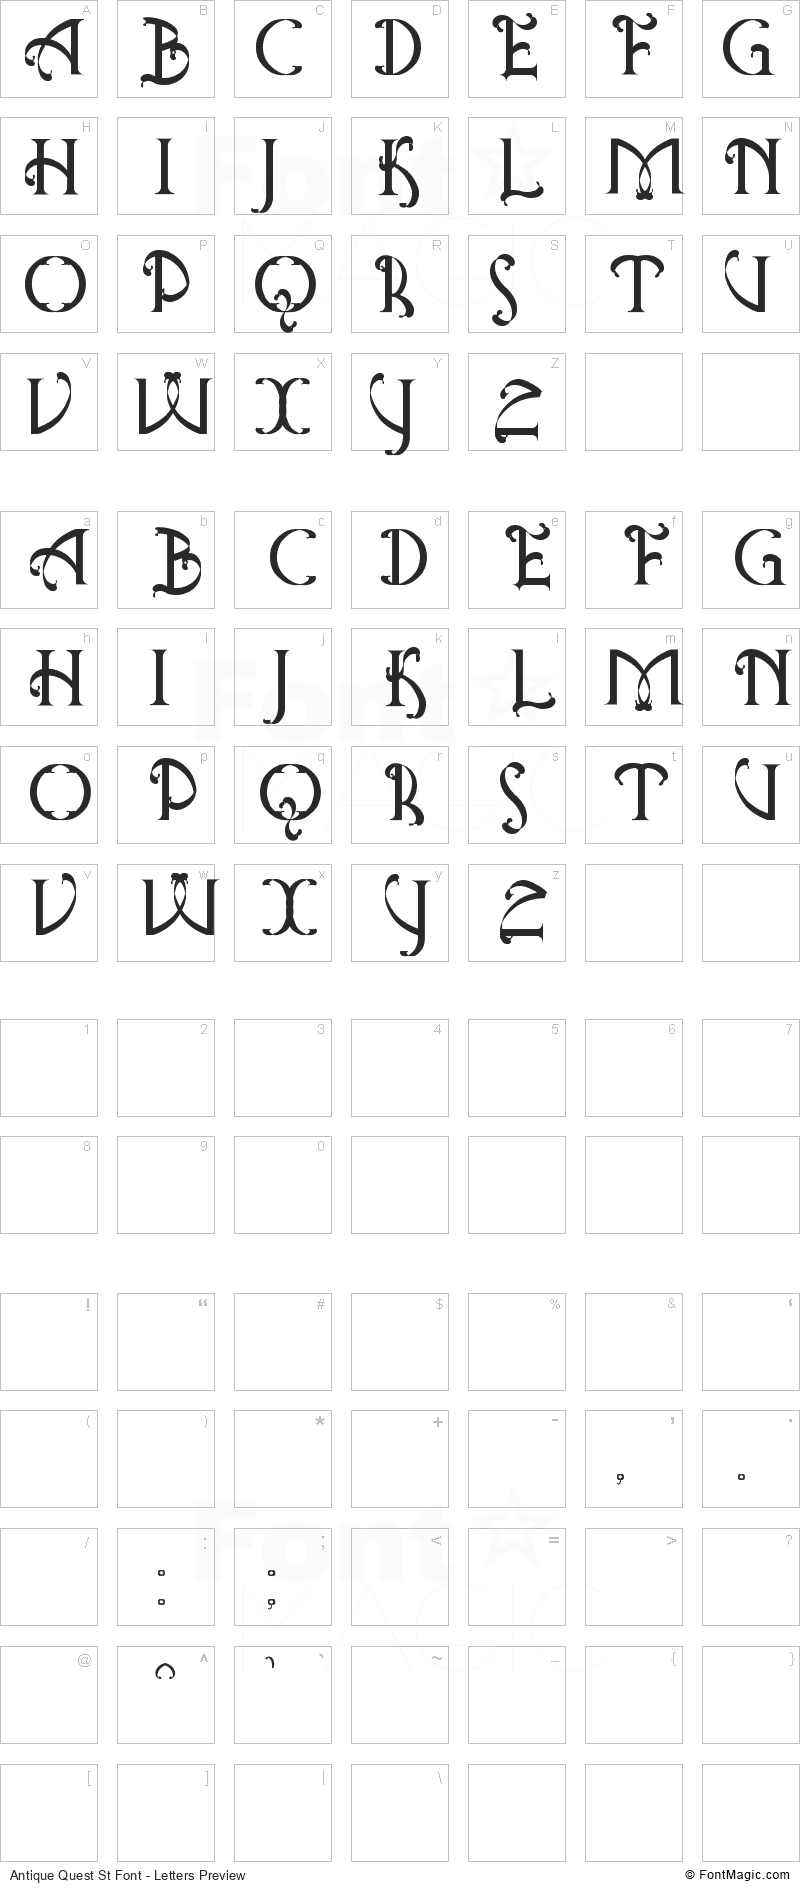 Antique Quest St Font - All Latters Preview Chart